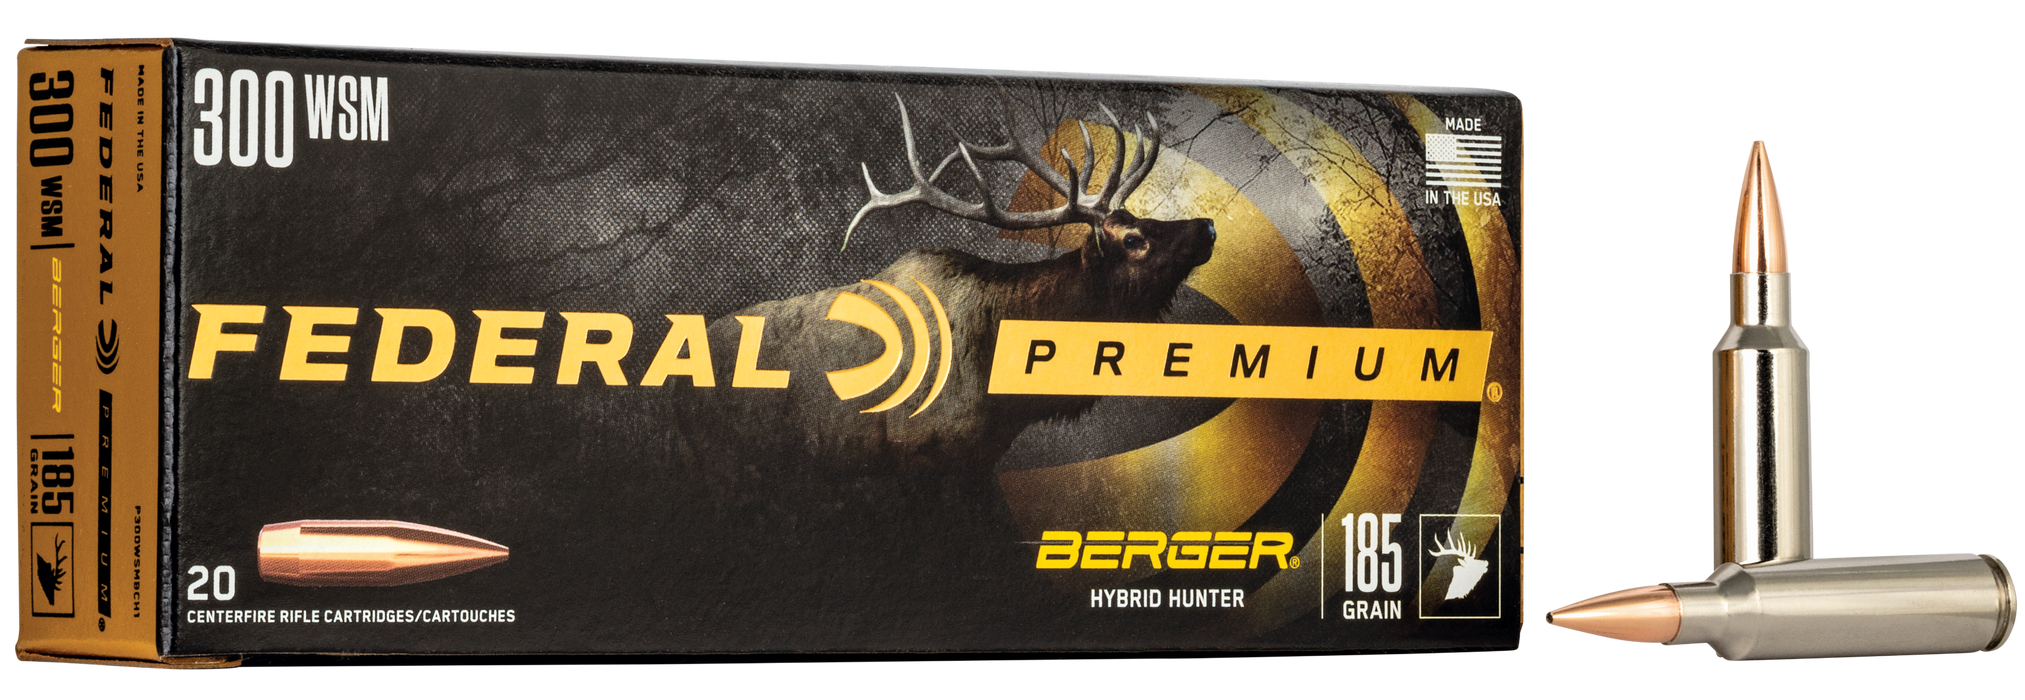 Federal Premium Hunting .300 WSM 185 gr Berger Hybrid Hunter 20 Per Box